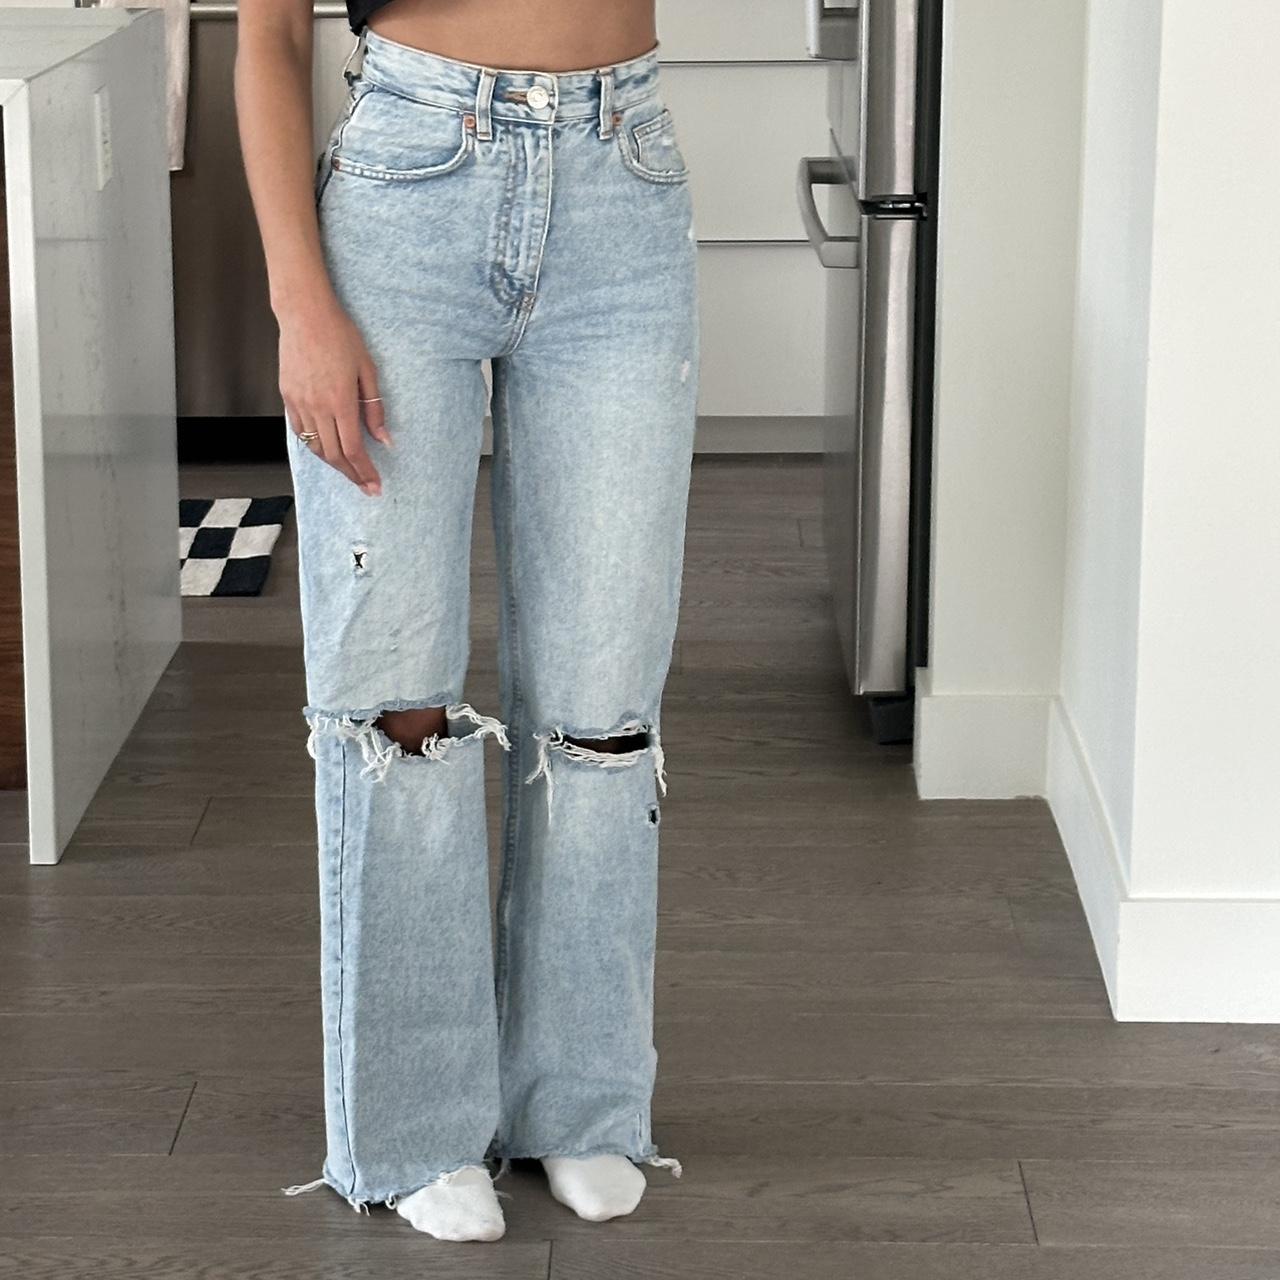 Wide leg Zara jeans I’m 5’6 for length reference... - Depop